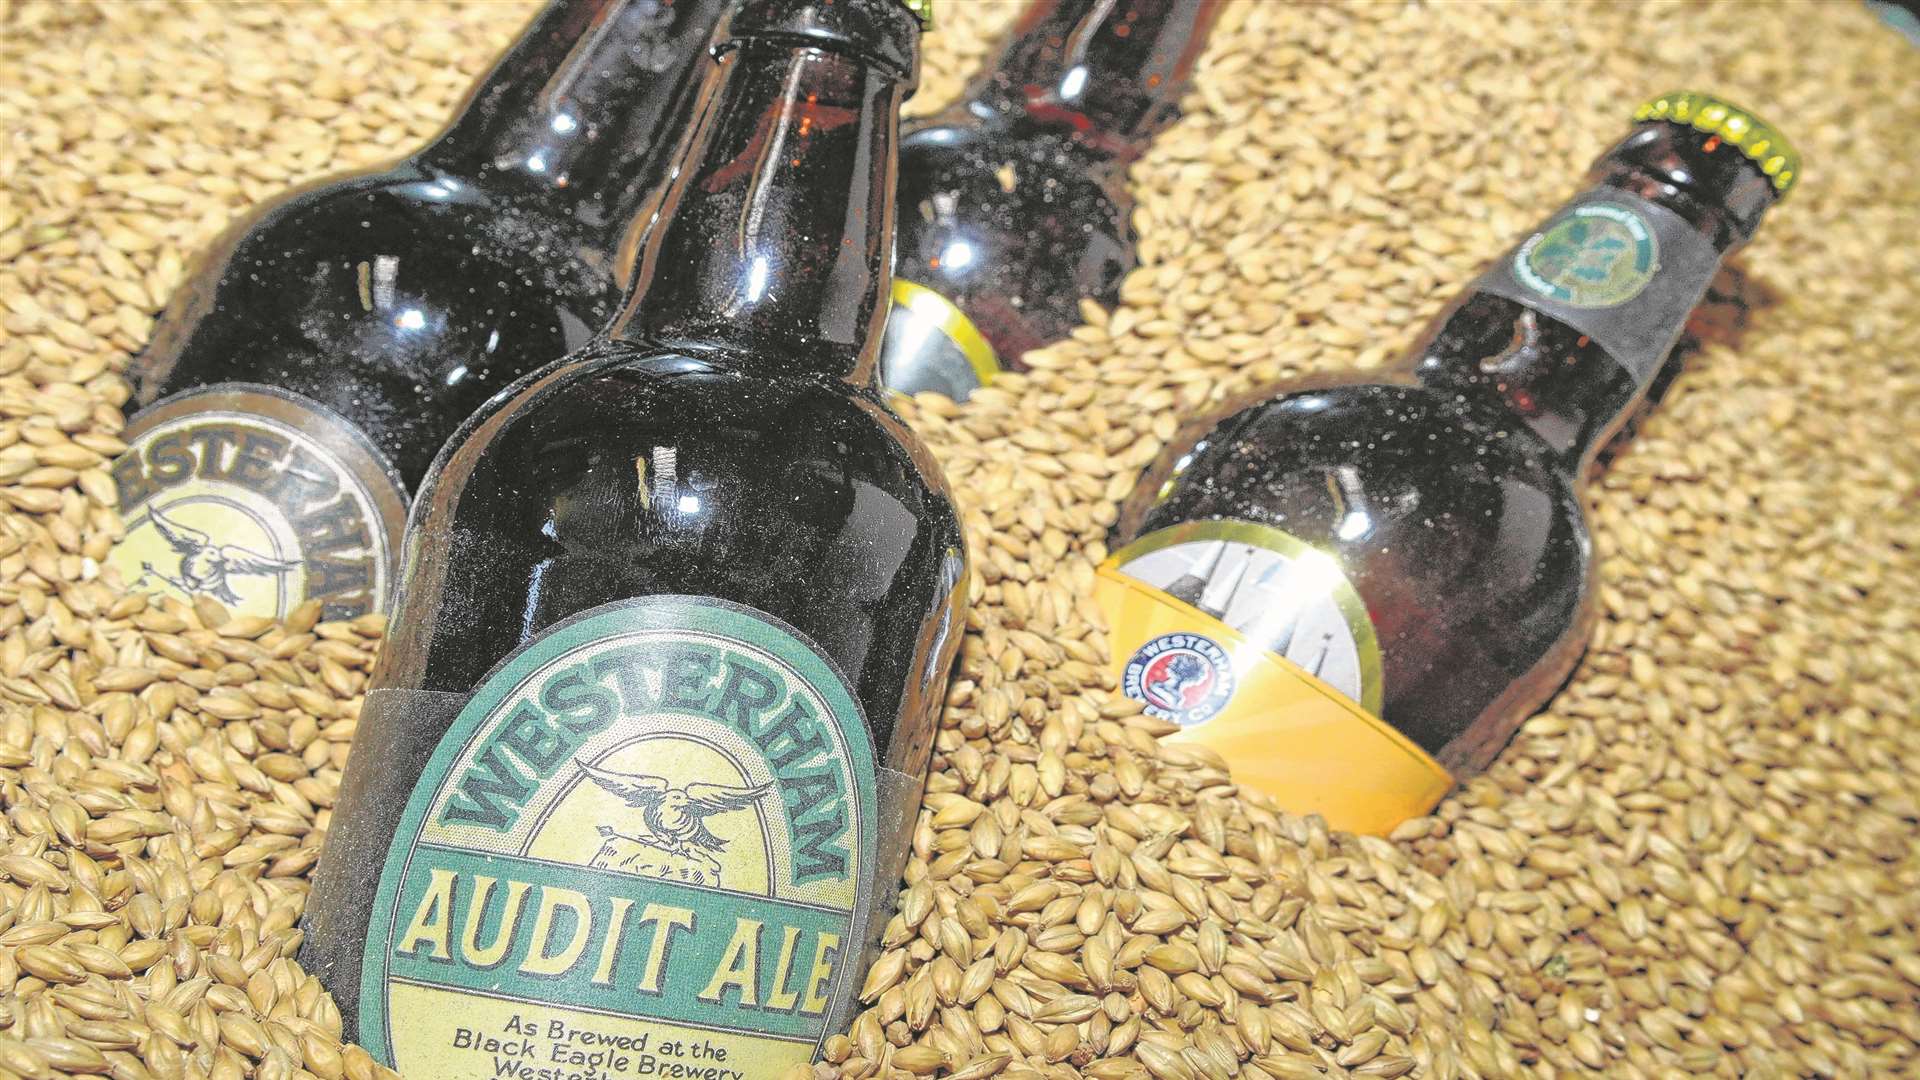 Westerham Brewery beers are popular with BeerBods subscribers